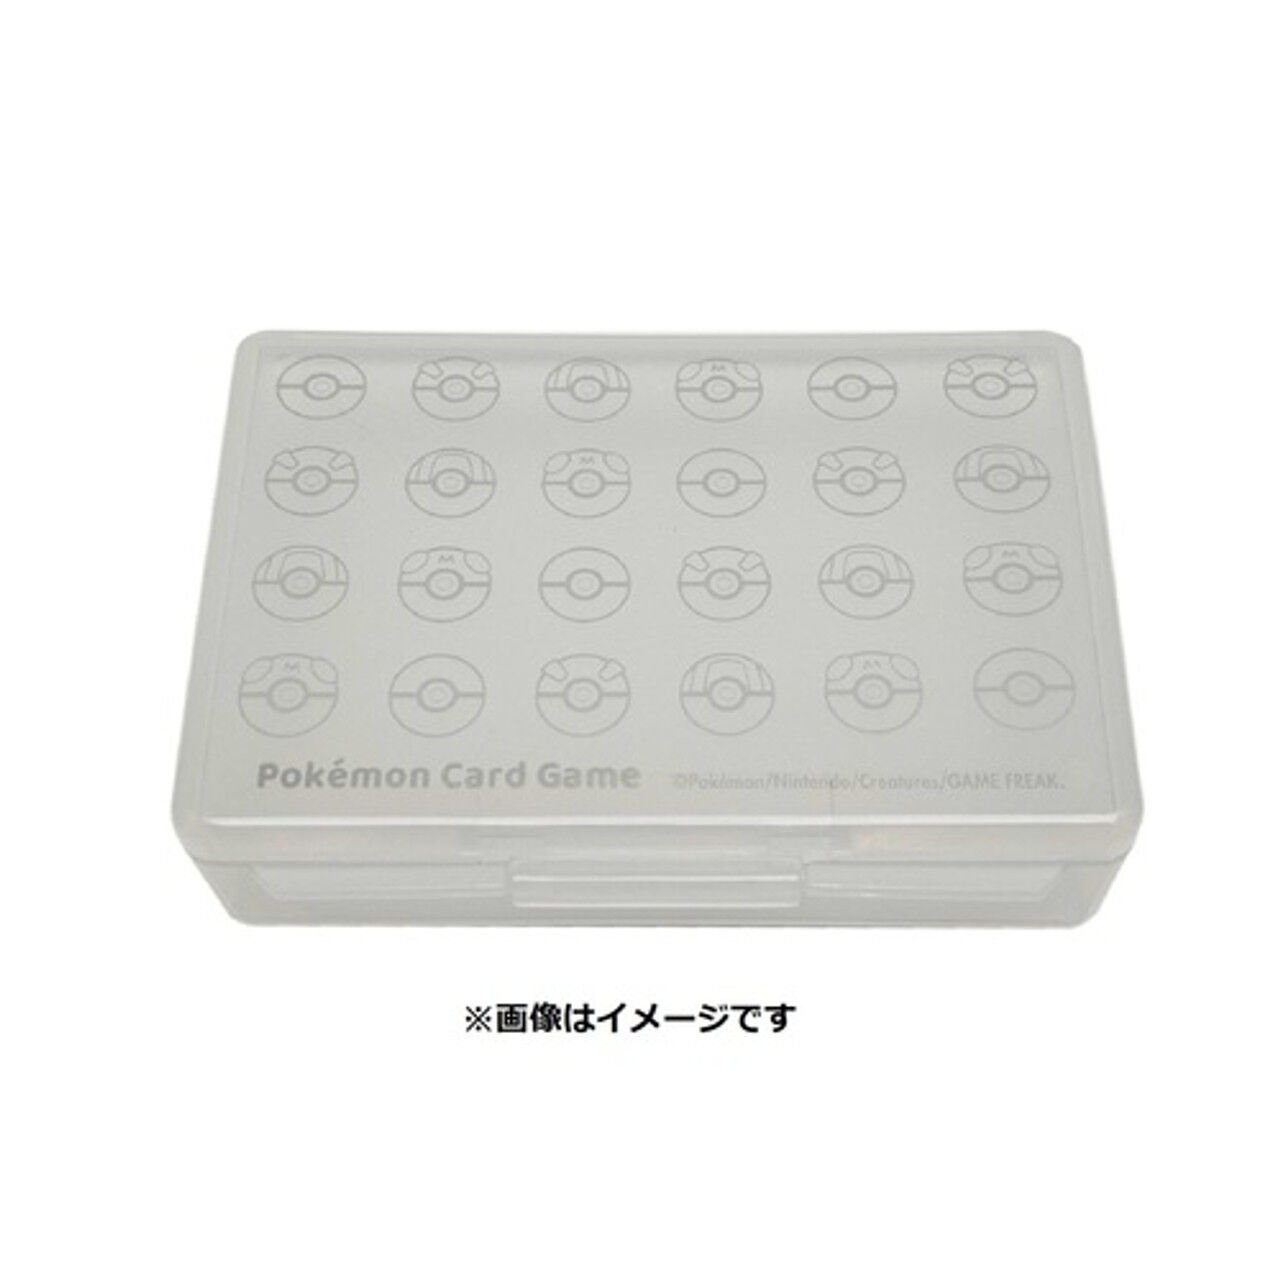 Pokémon Pokeball Damage Counter Box